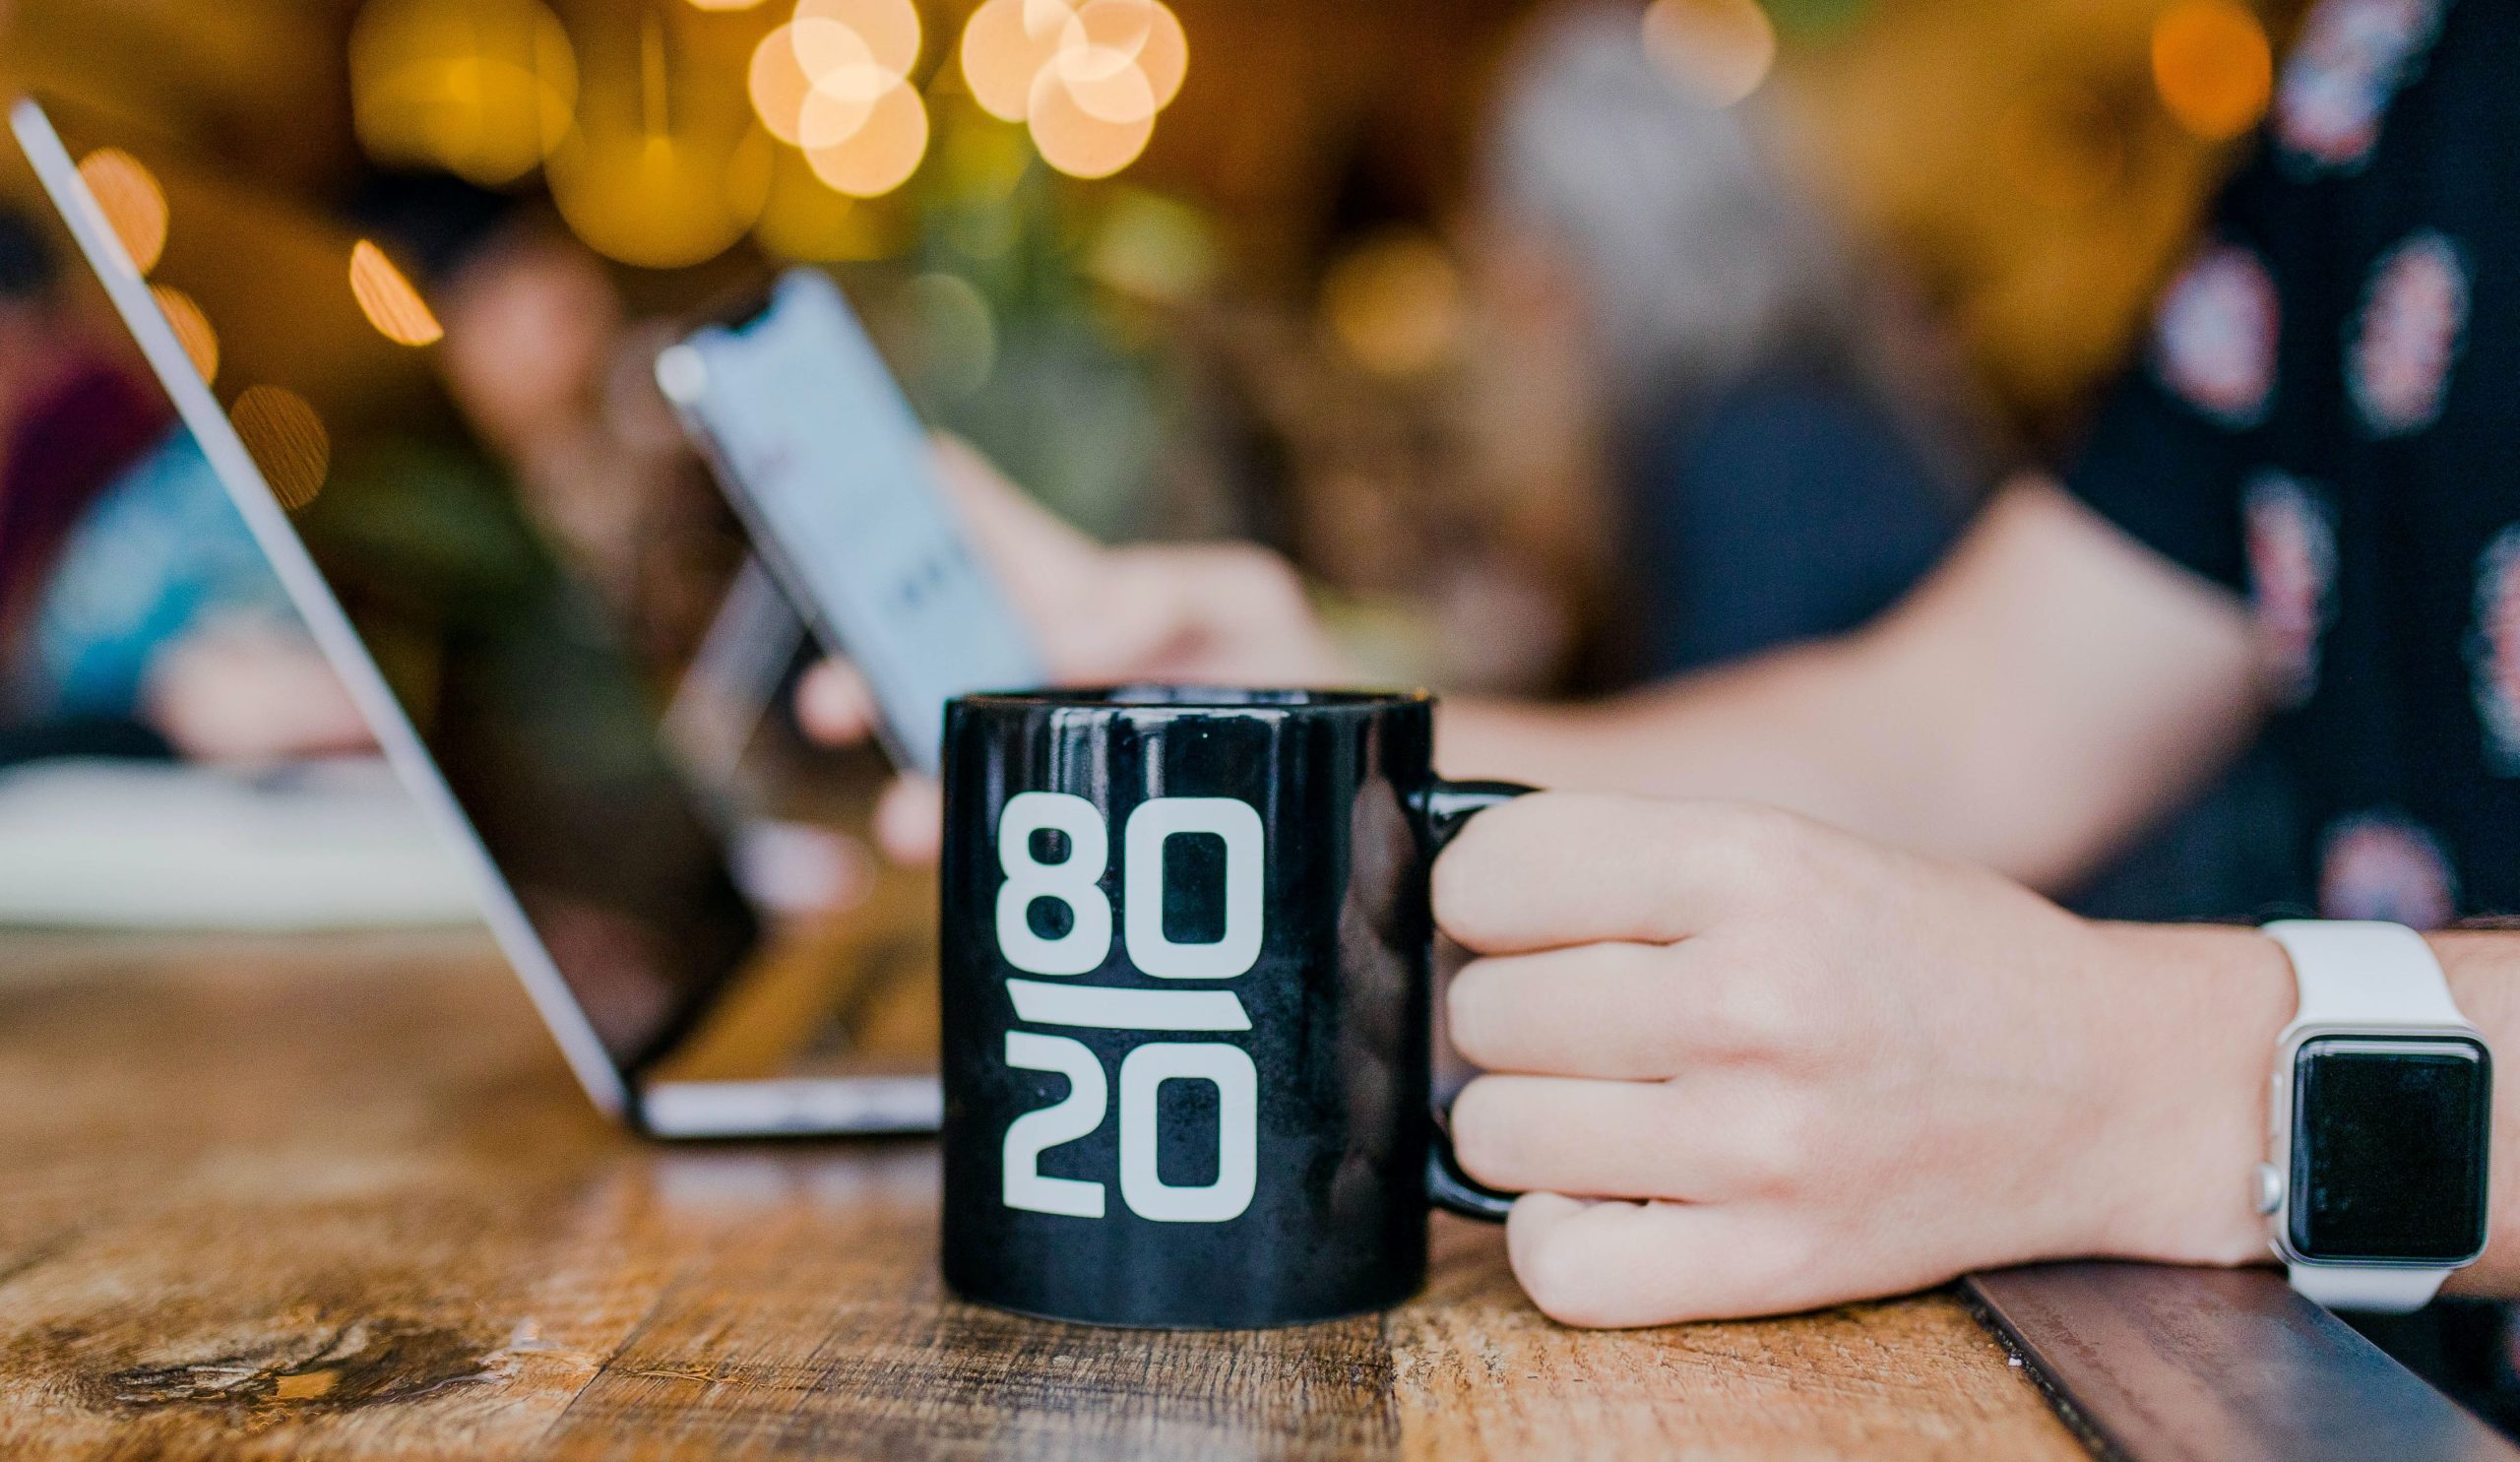 Close up of a coffee mug that displays '80-20'.